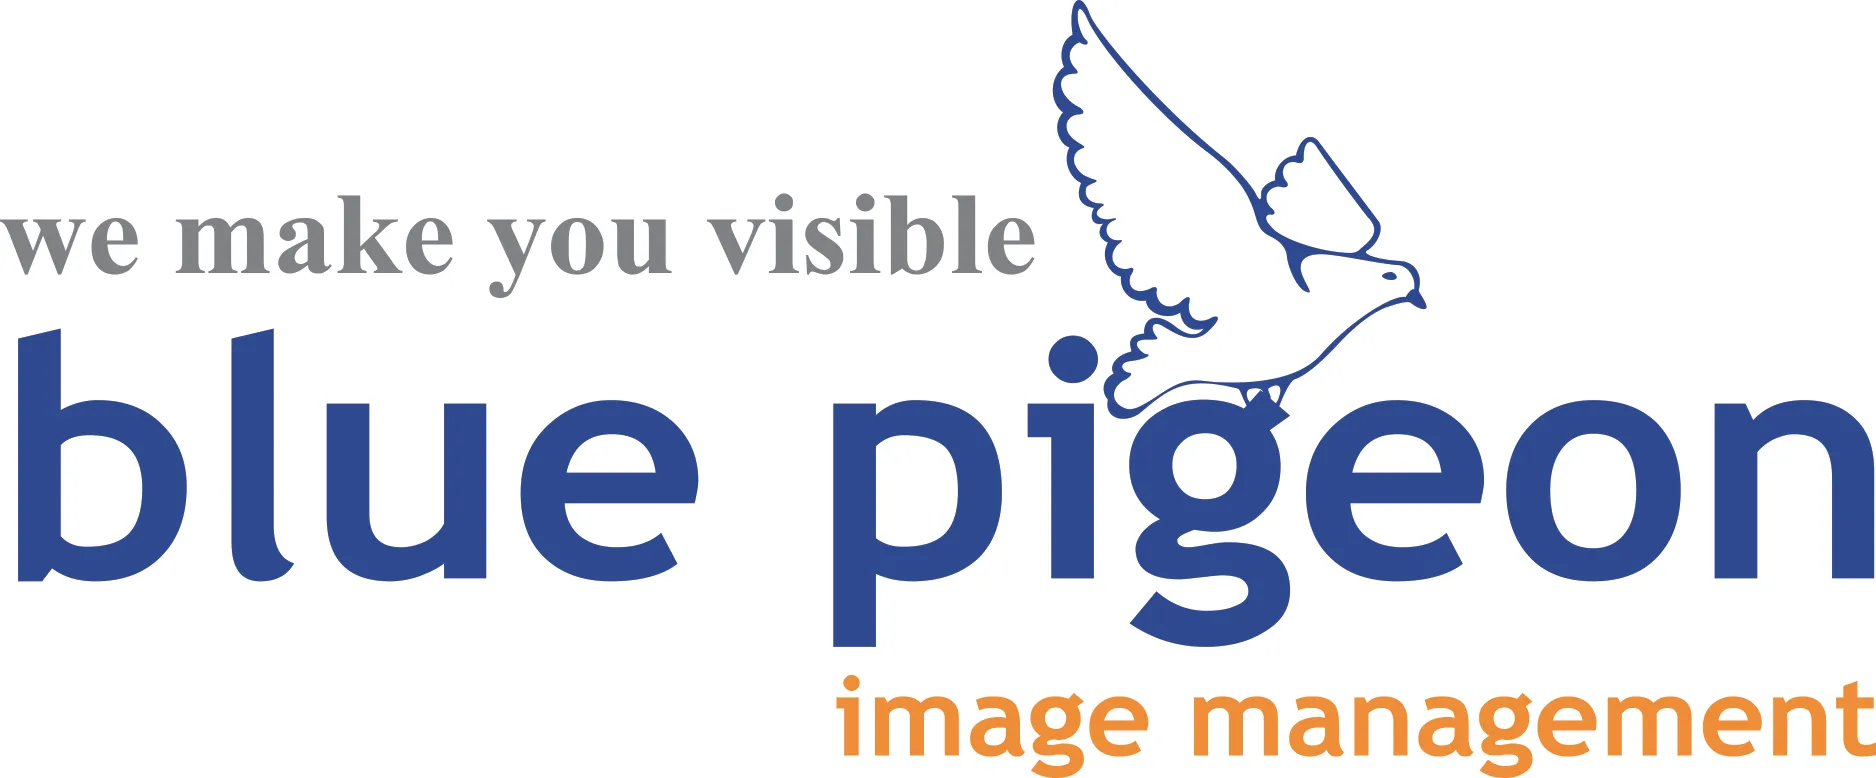 blue pigeon image management logo